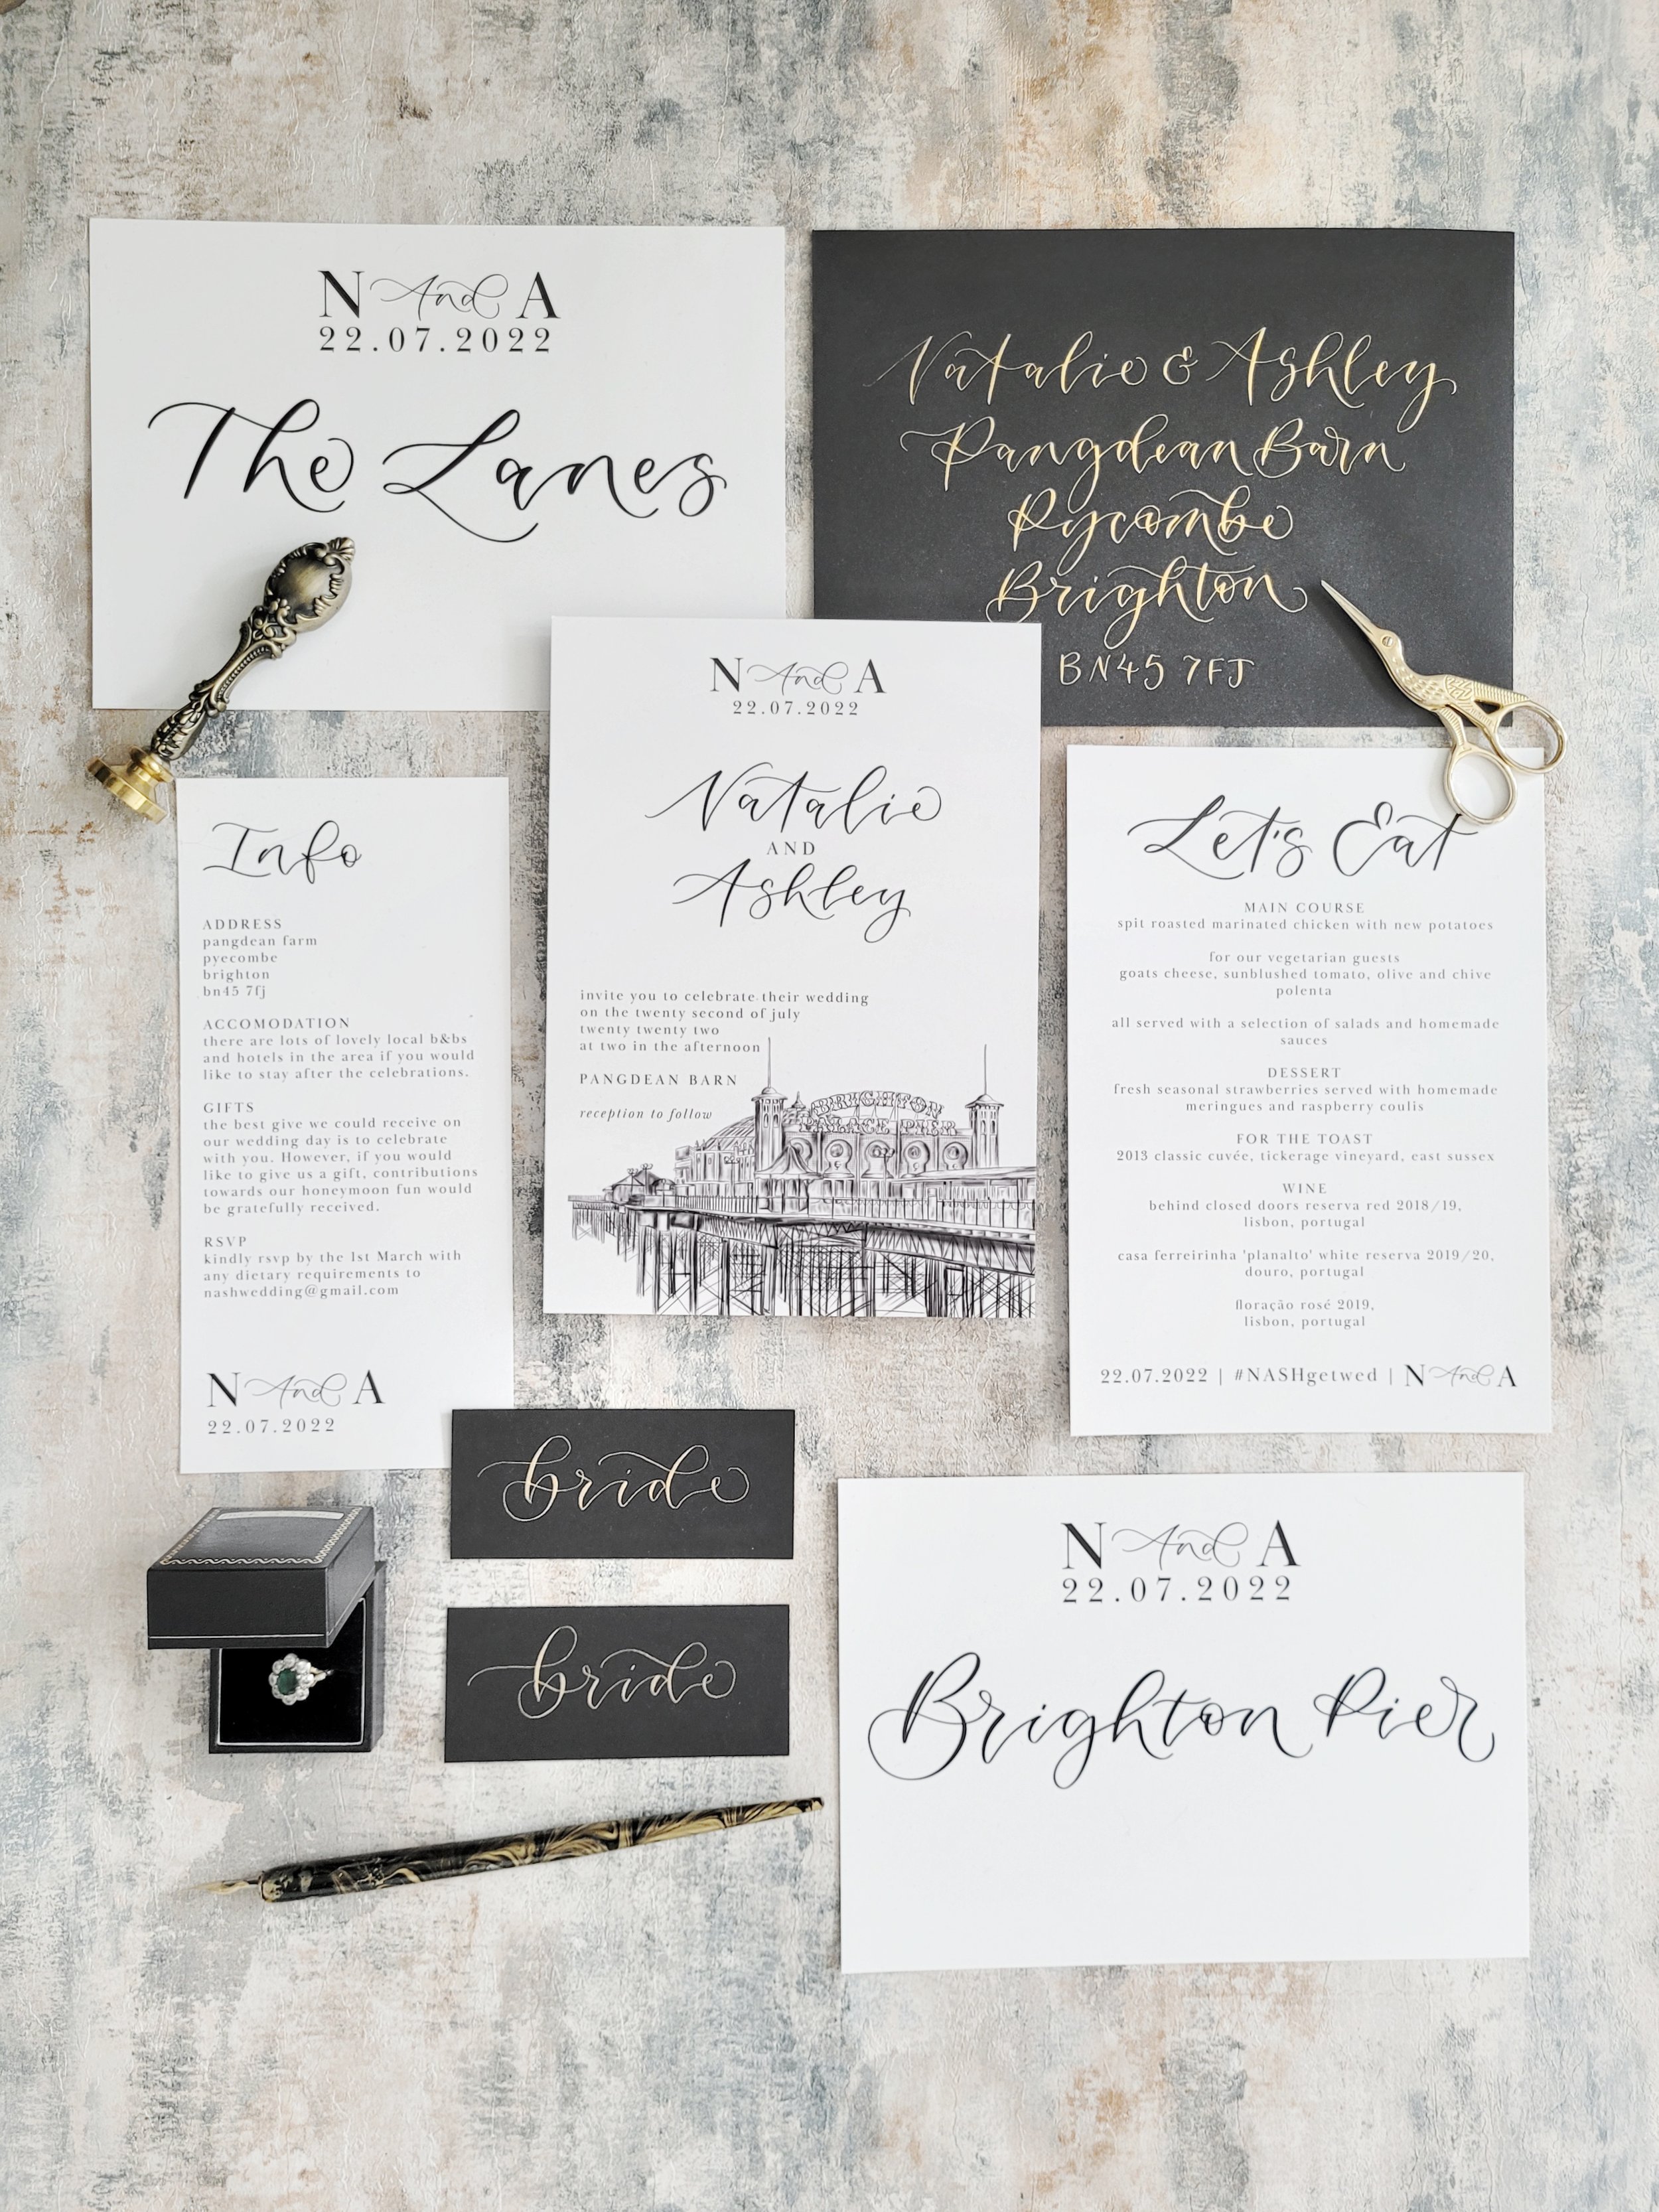 Brighton wedding stationery with pier illustration and modern calligraphy - monochrome minimalist invitation set.jpeg